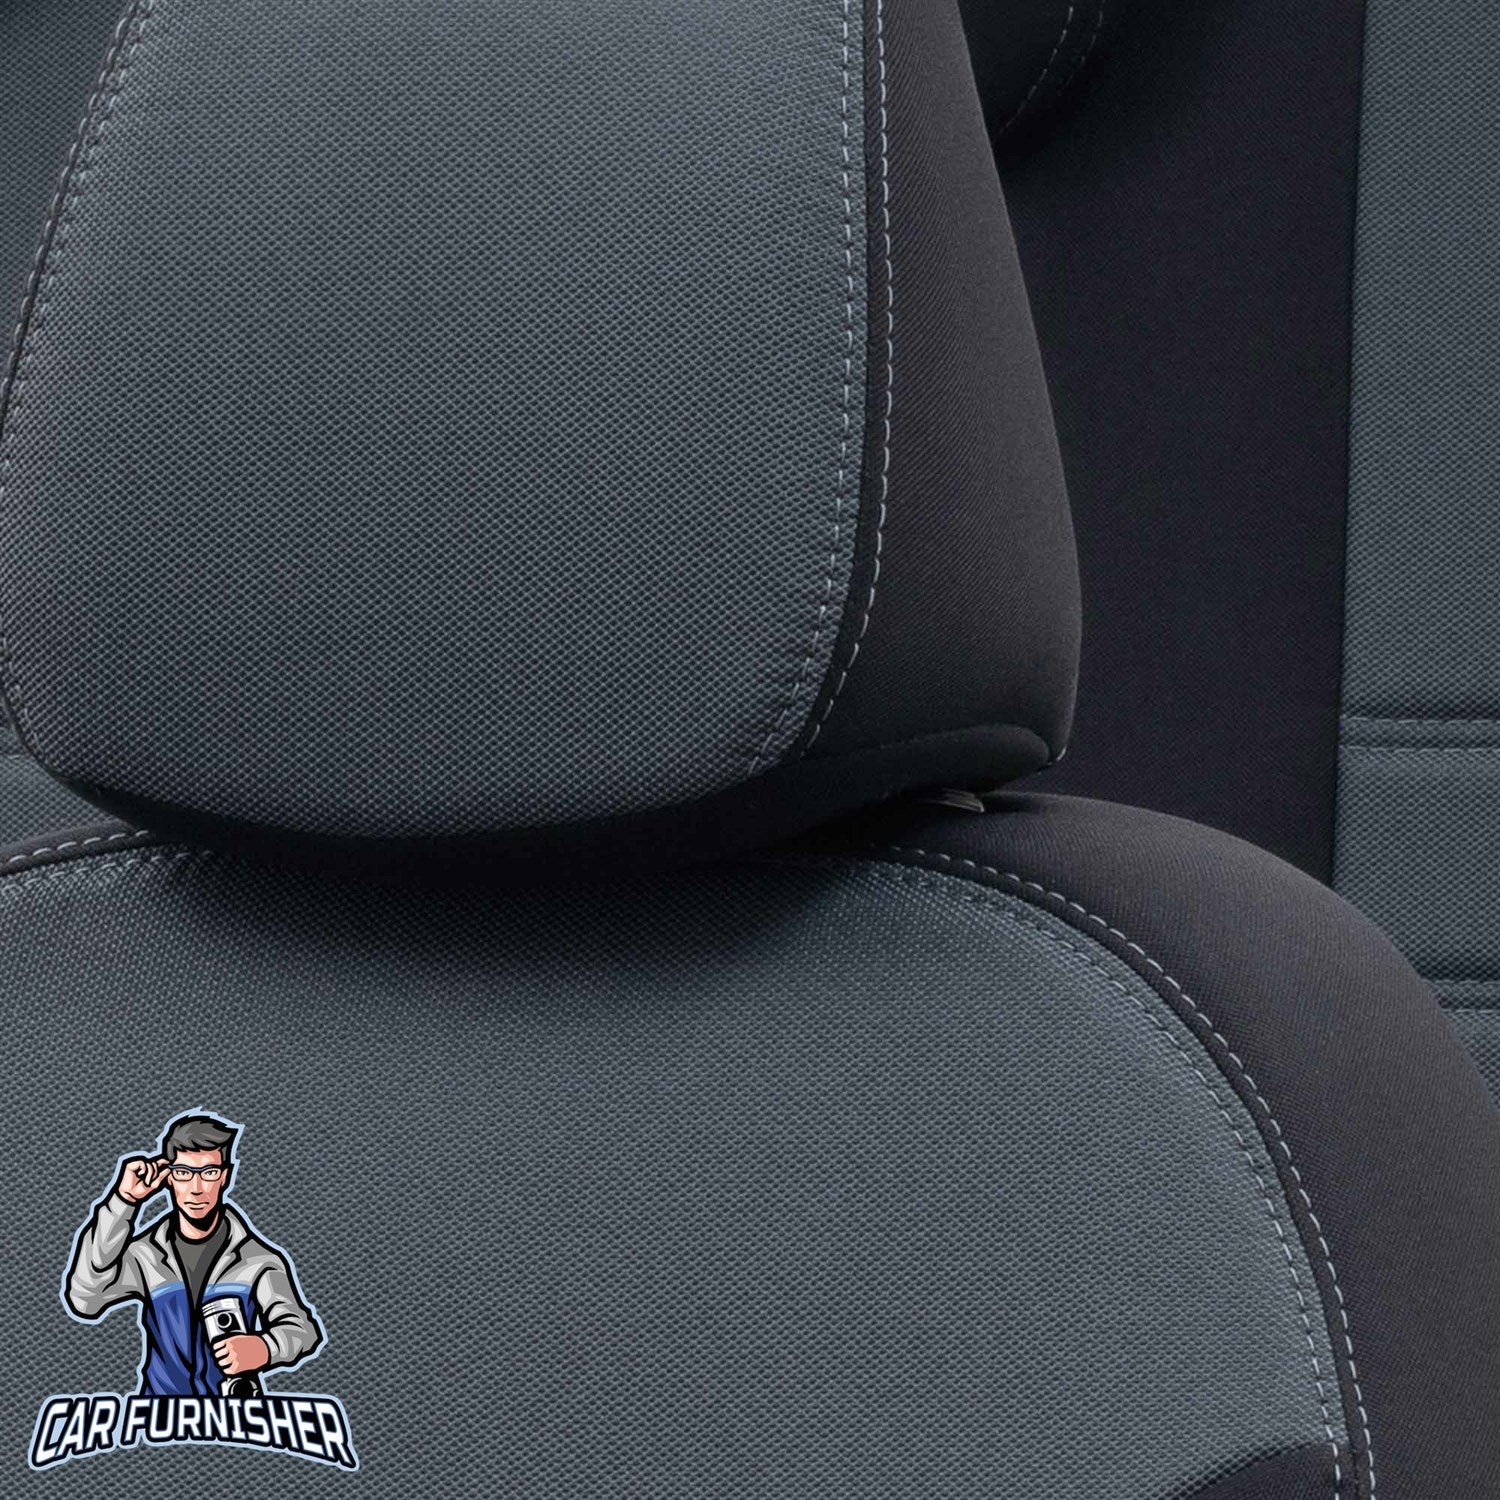 Mazda 6 Seat Covers Original Jacquard Design Smoked Black Jacquard Fabric